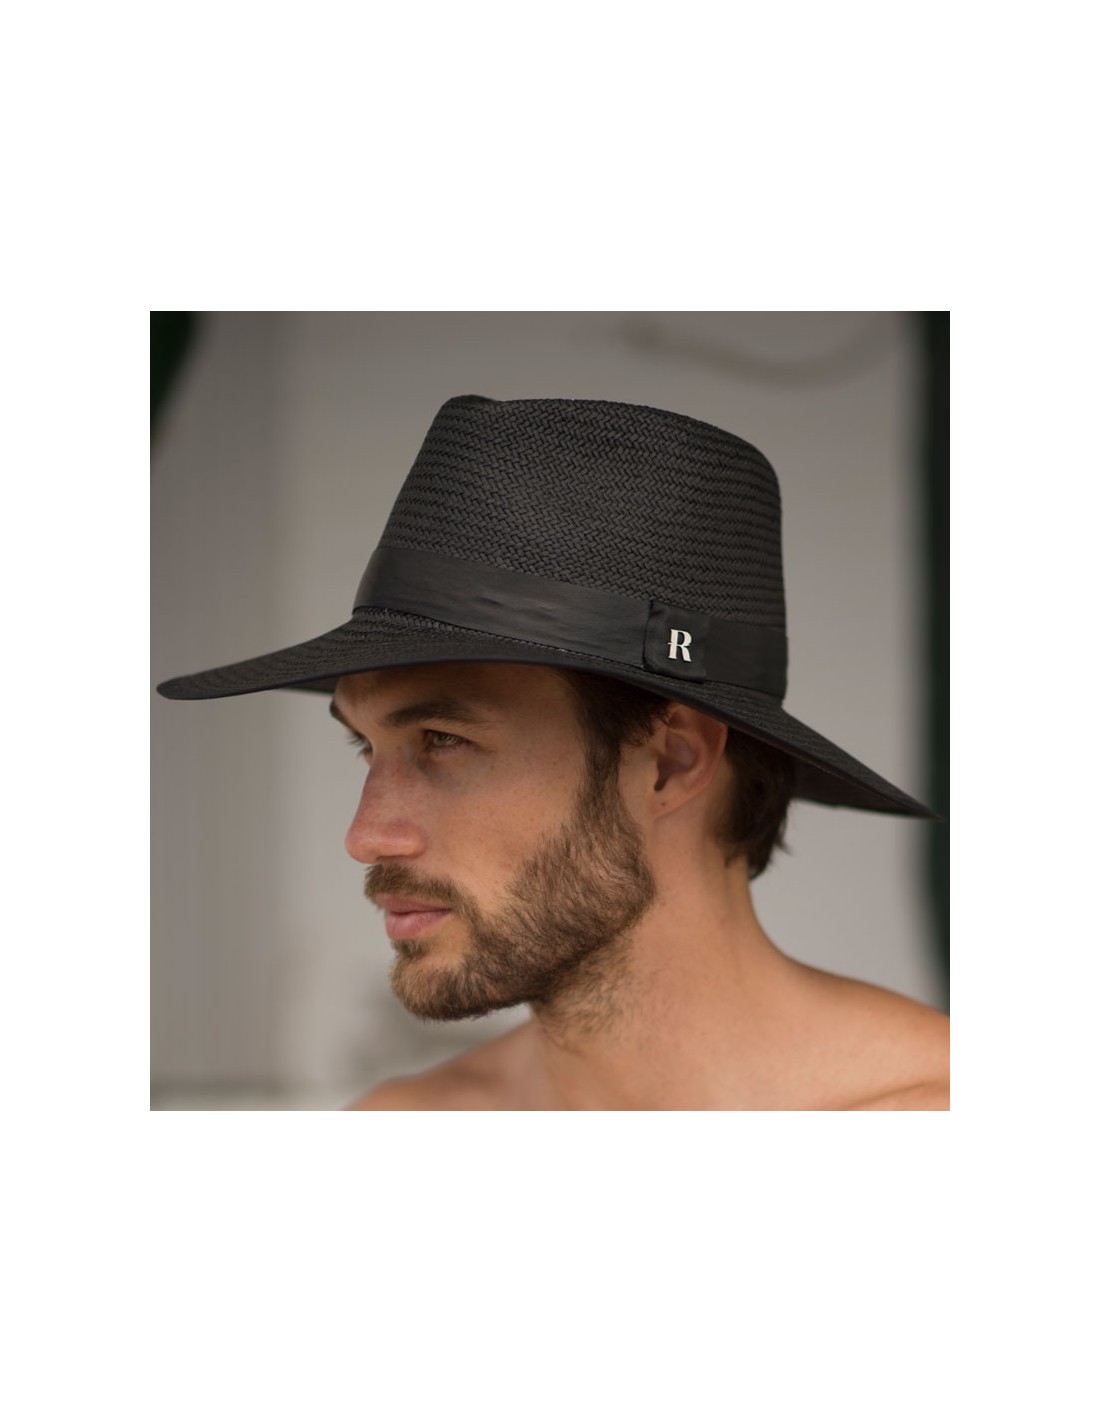 Shop Straw Hat Florida Black - Men's Hats - Raceu Hats Online